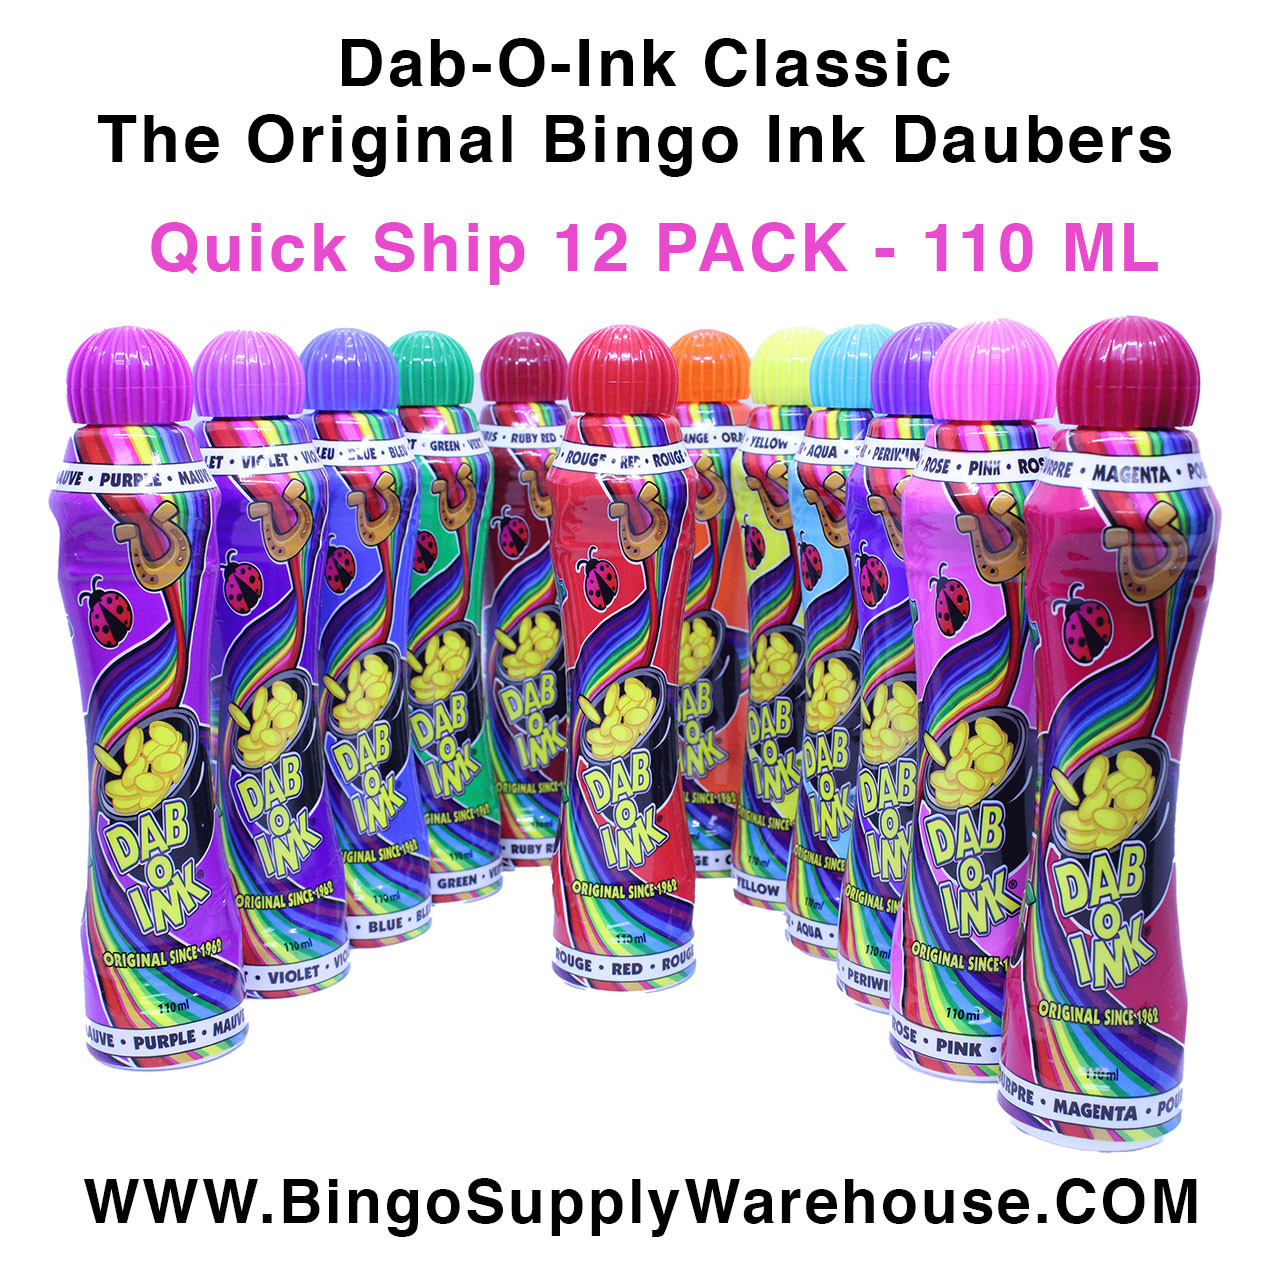 Dab-O-Ink Bingo Daubers - 3 pack - Aqua, Violet, Yellow - 3 ounce